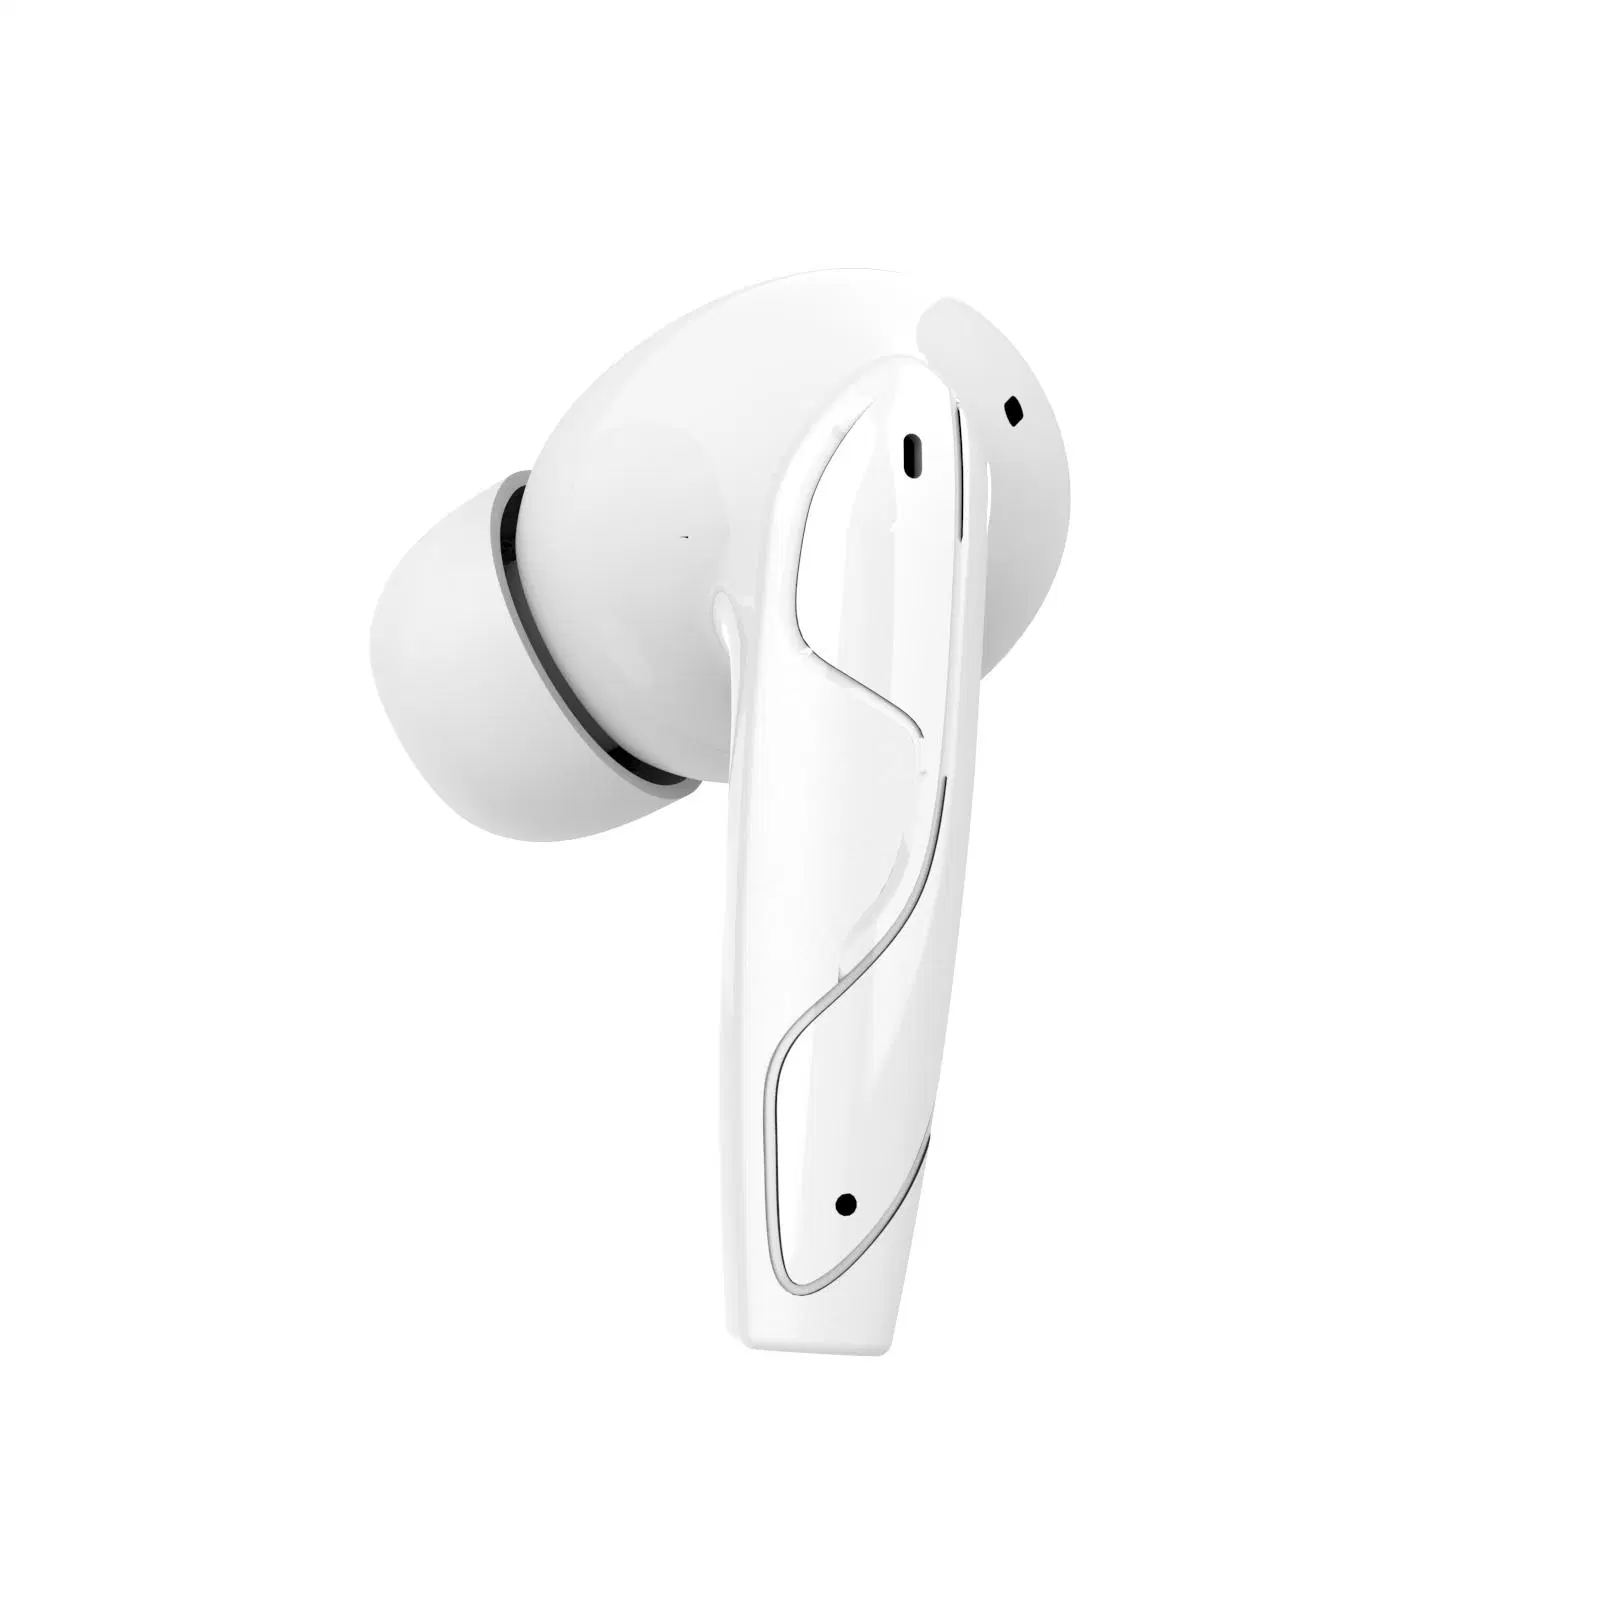 OEM Anc Enc in-Ear Earpiece Tws Earplugs Sport Earbuds Wireless Headphone Waterproof Earphone with Android and Apple Phones for Free Samples